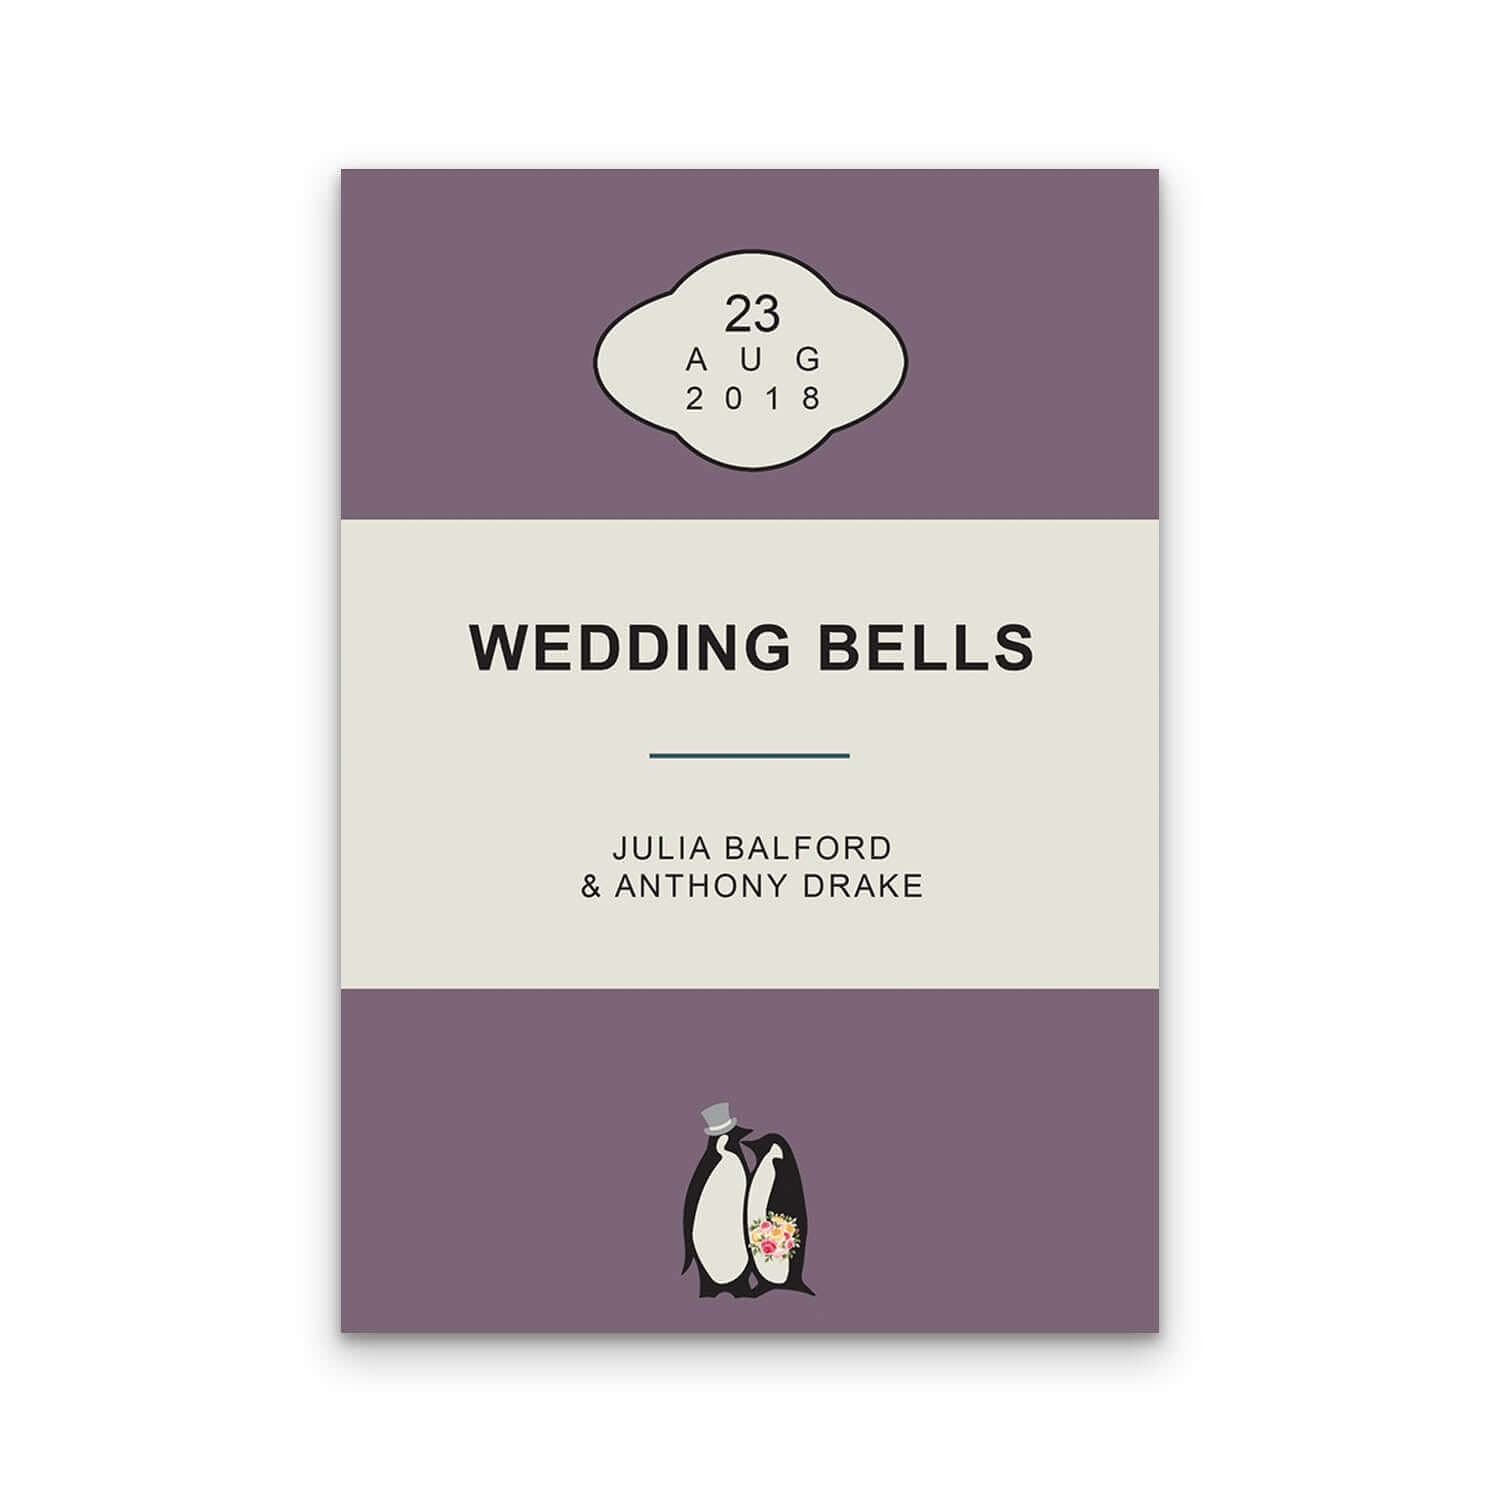 Penny Classics Book Folded 5x7 Wedding Invitations Wedding Stationery Mustard and Gray Ltd Shropshire UK